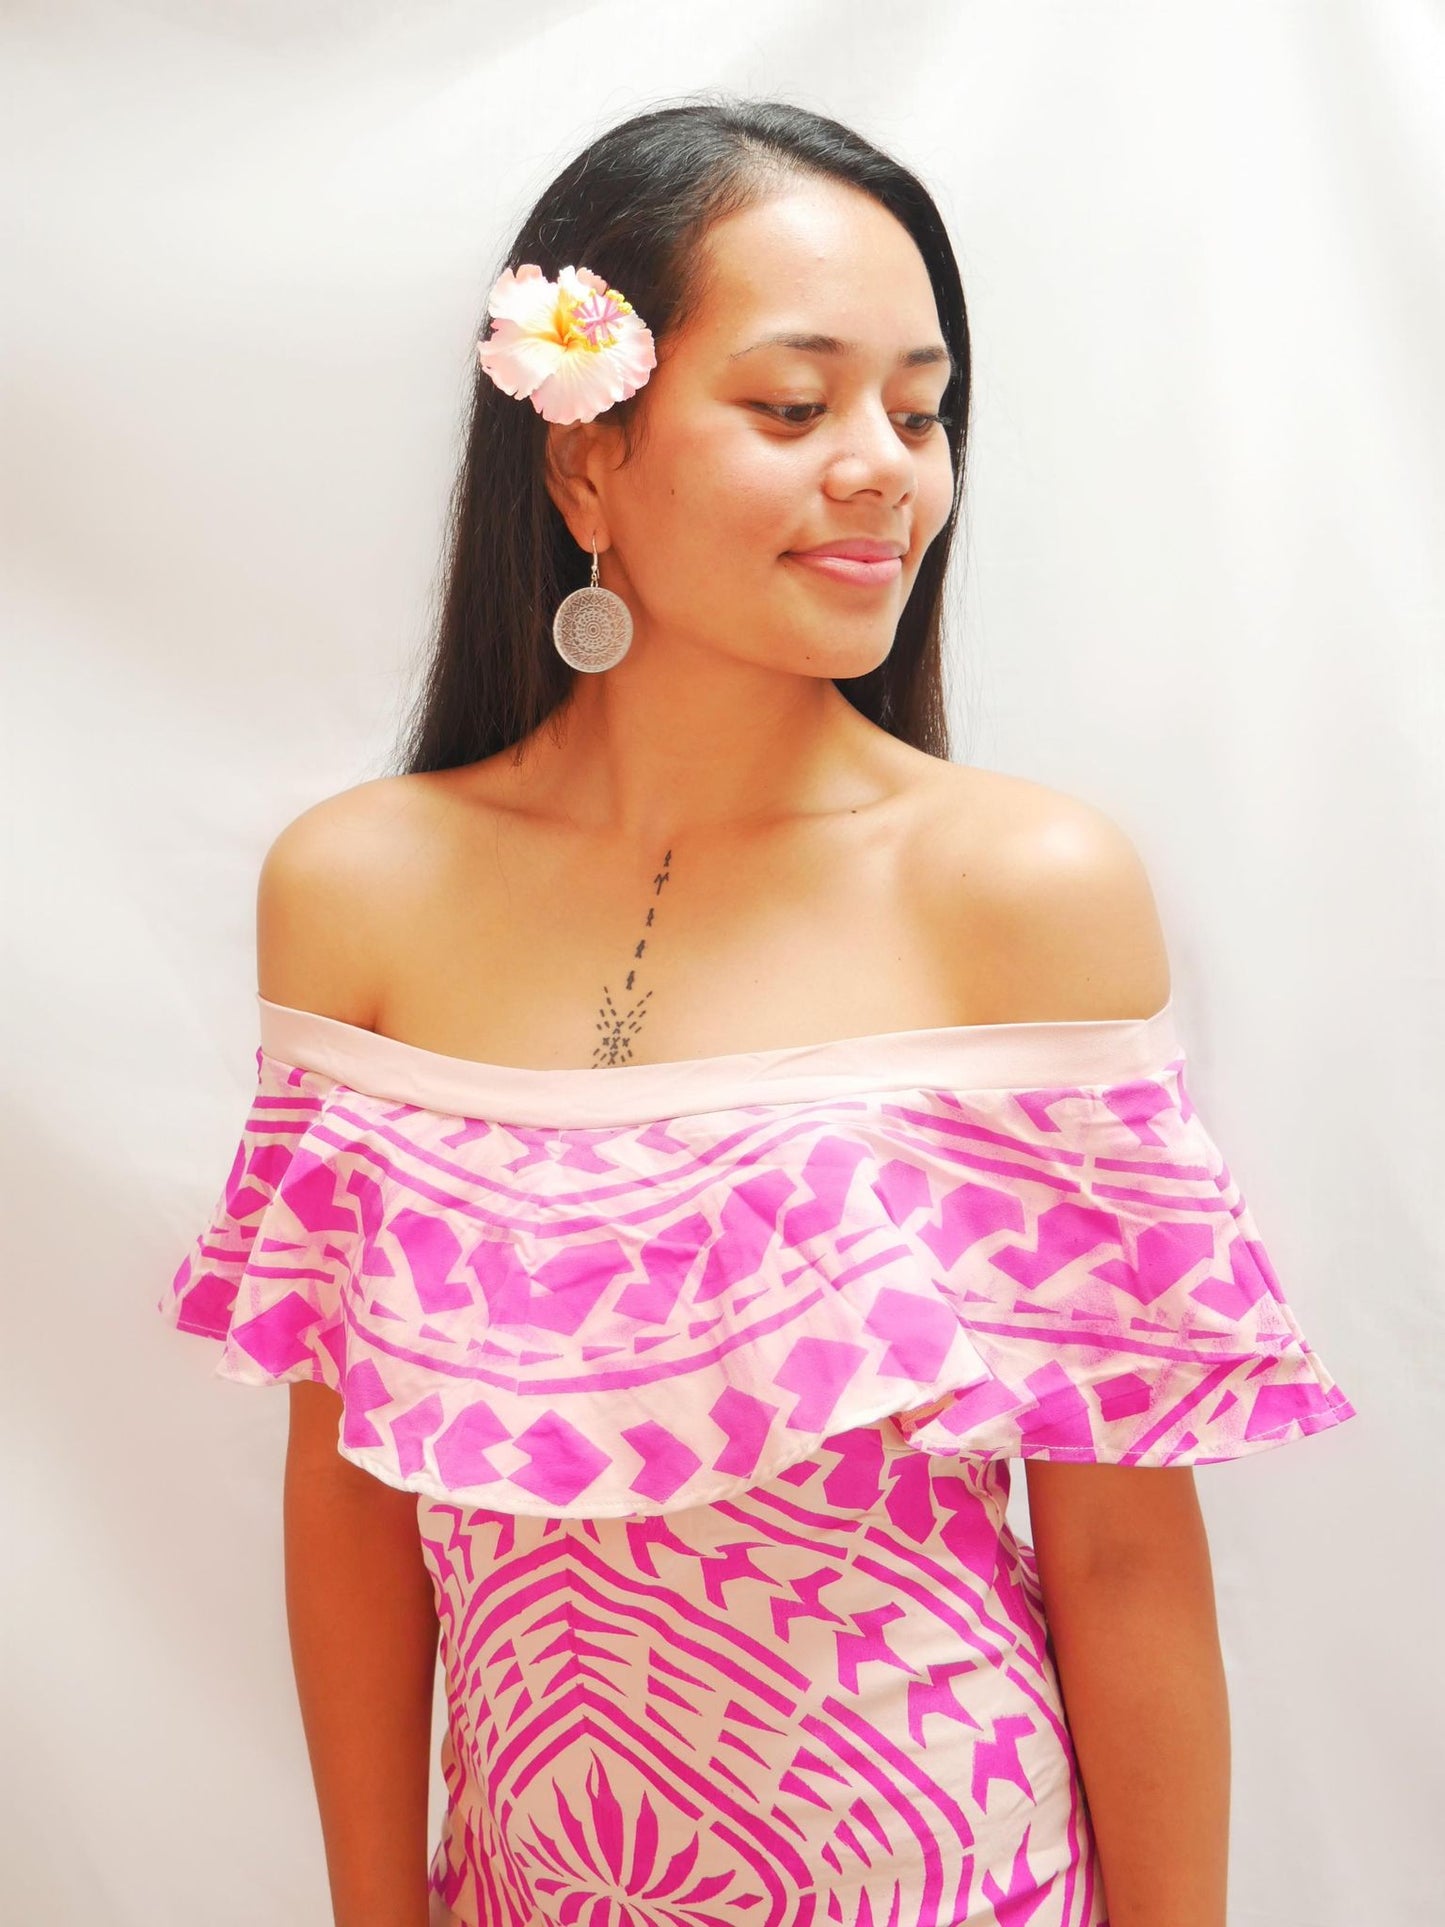 Cece's Pastel Pink Pasifika Dress